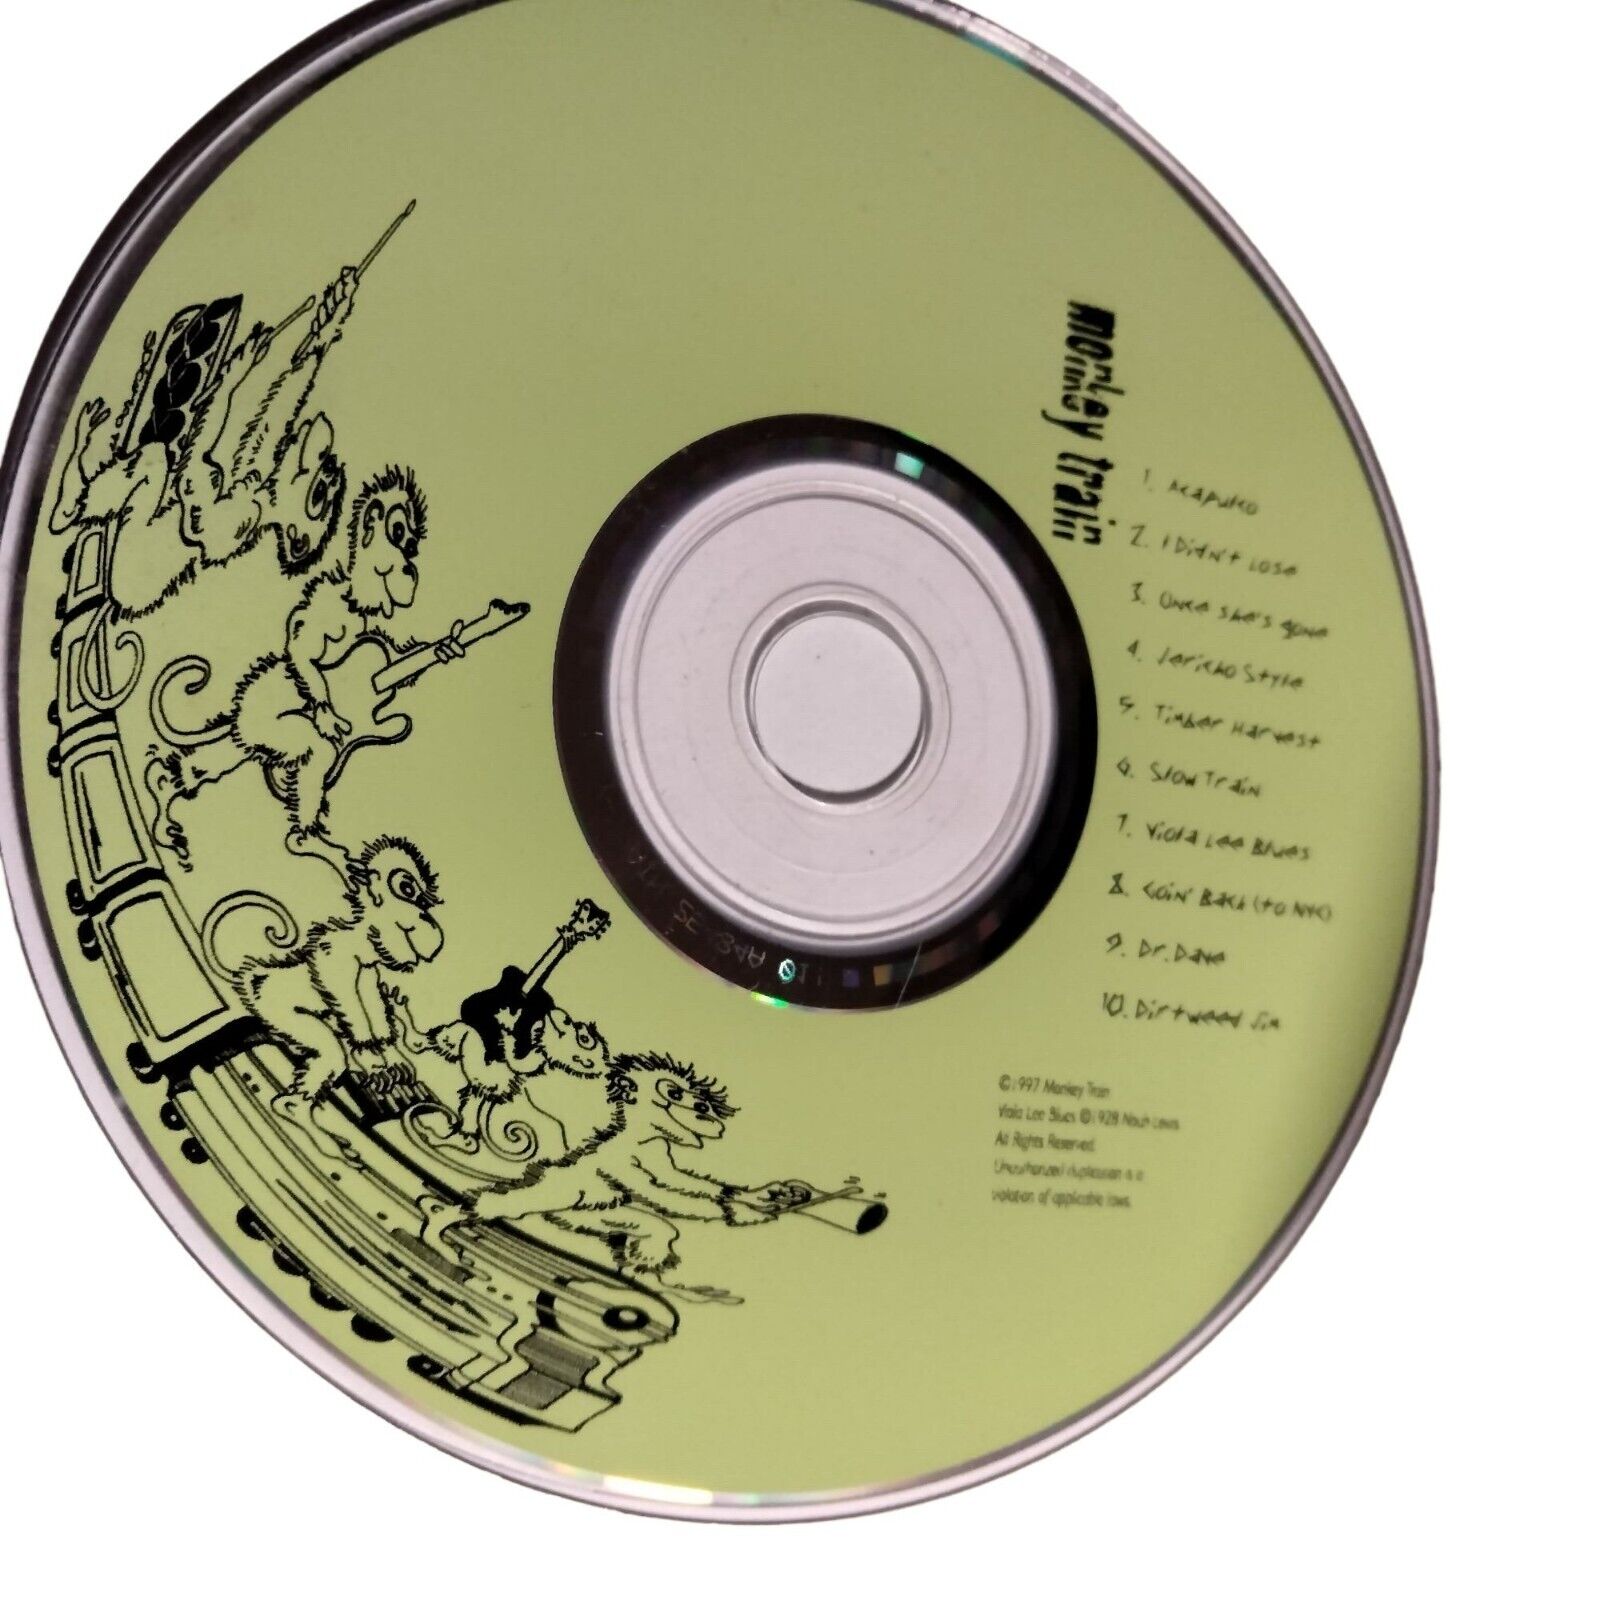 Monkey Train India Band 1997 Viola Lee Blues Dirtweed JIm Dr Dave Goin NYC CD